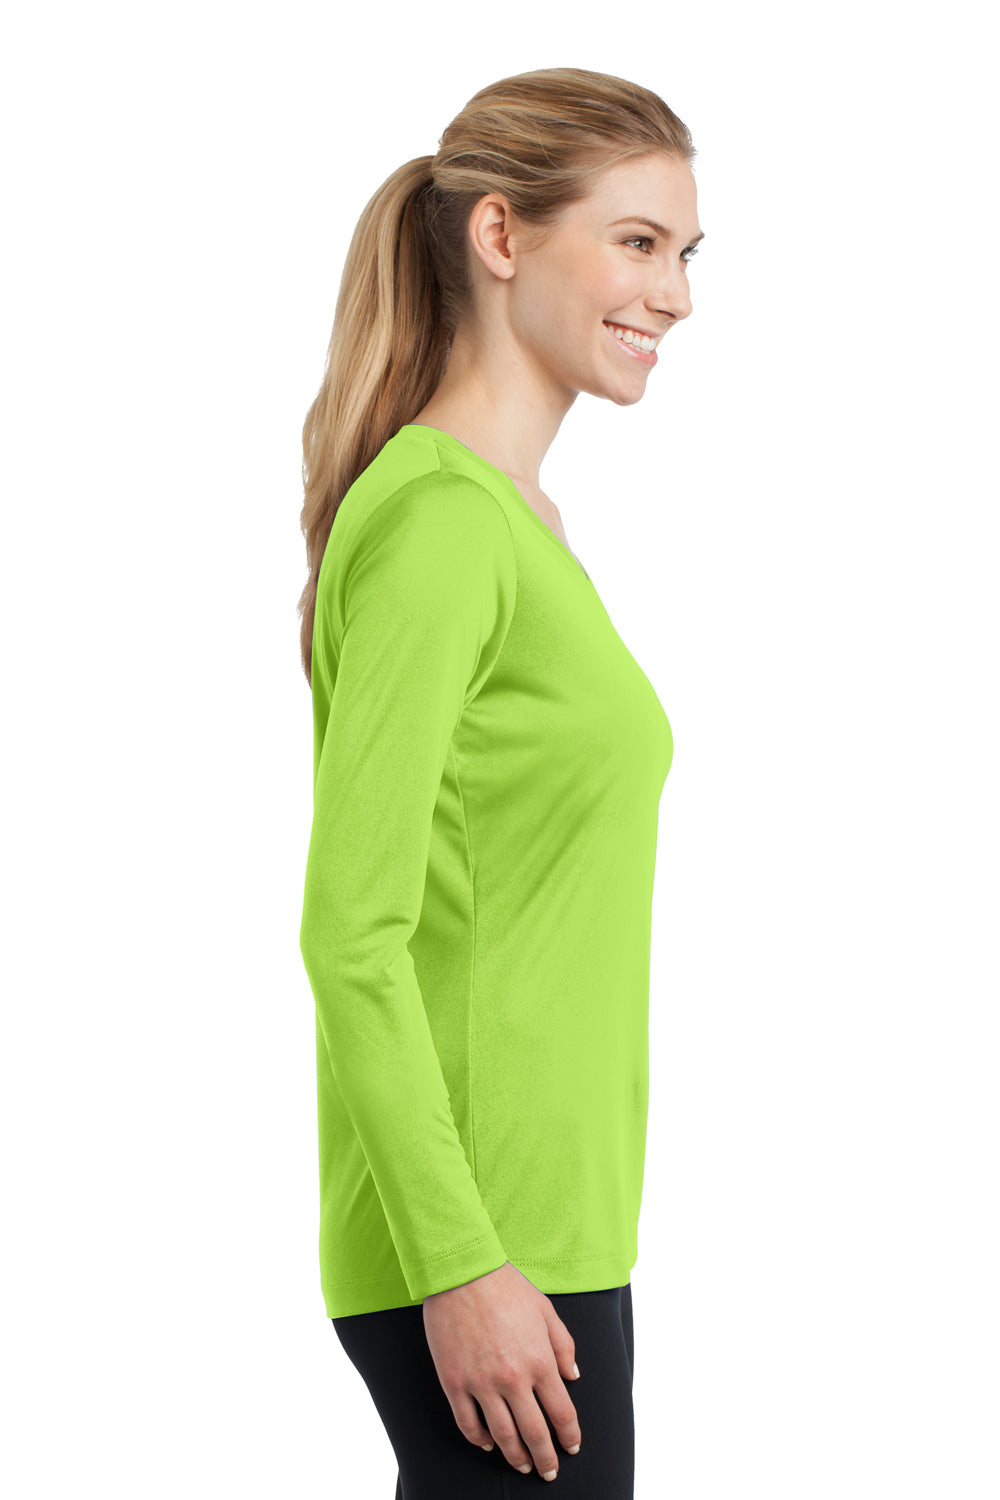 Ladies Big Size Long Sleeve Competitor V-Neck T-Shirt, Long Sleeve T-Shirt